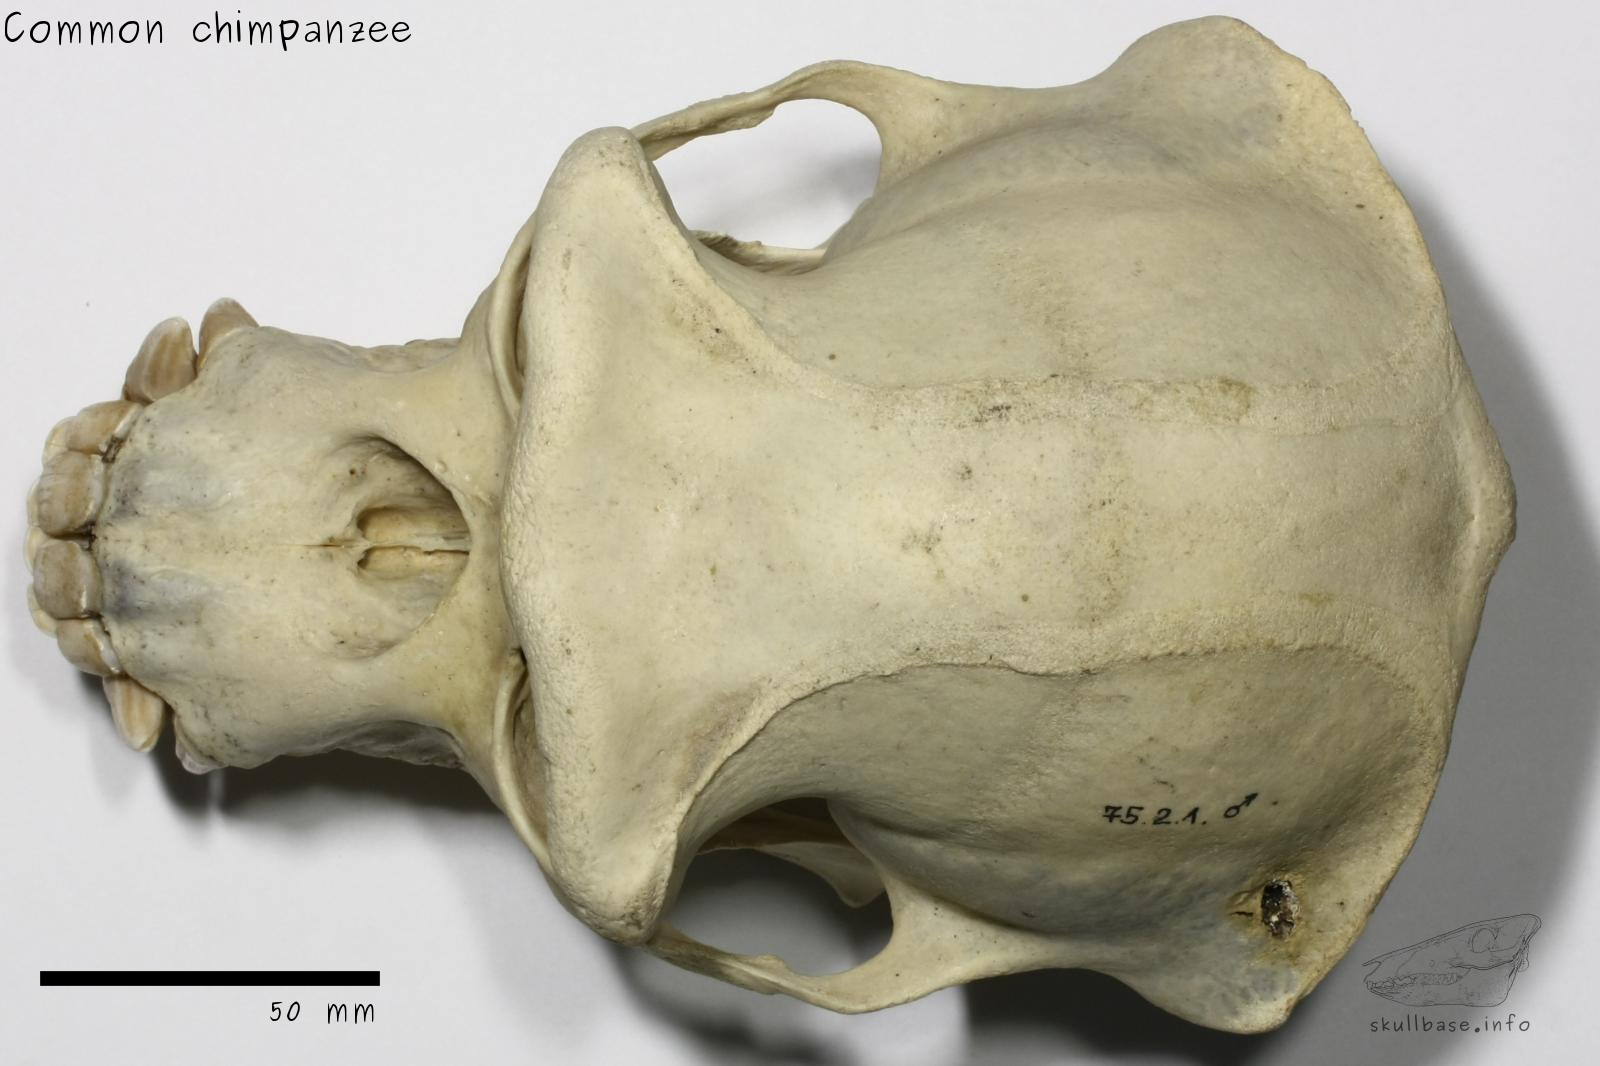 Common chimpanzee (Pan troglodytes) skull dorsal view